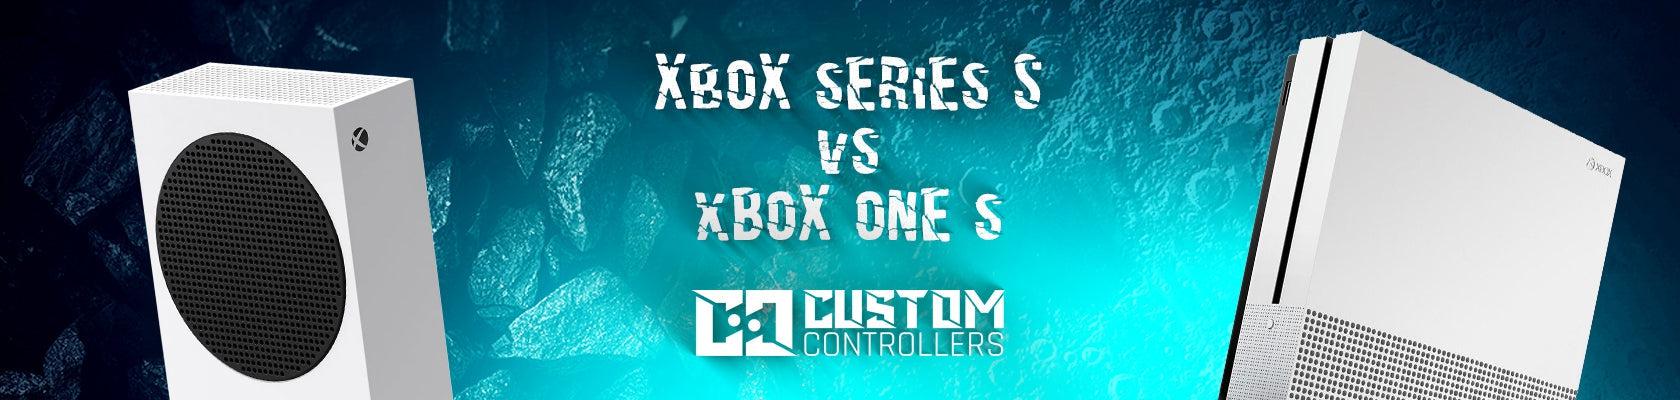 Microsoft Xbox Series S vs Microsoft Xbox One S-Custom Controllers UK